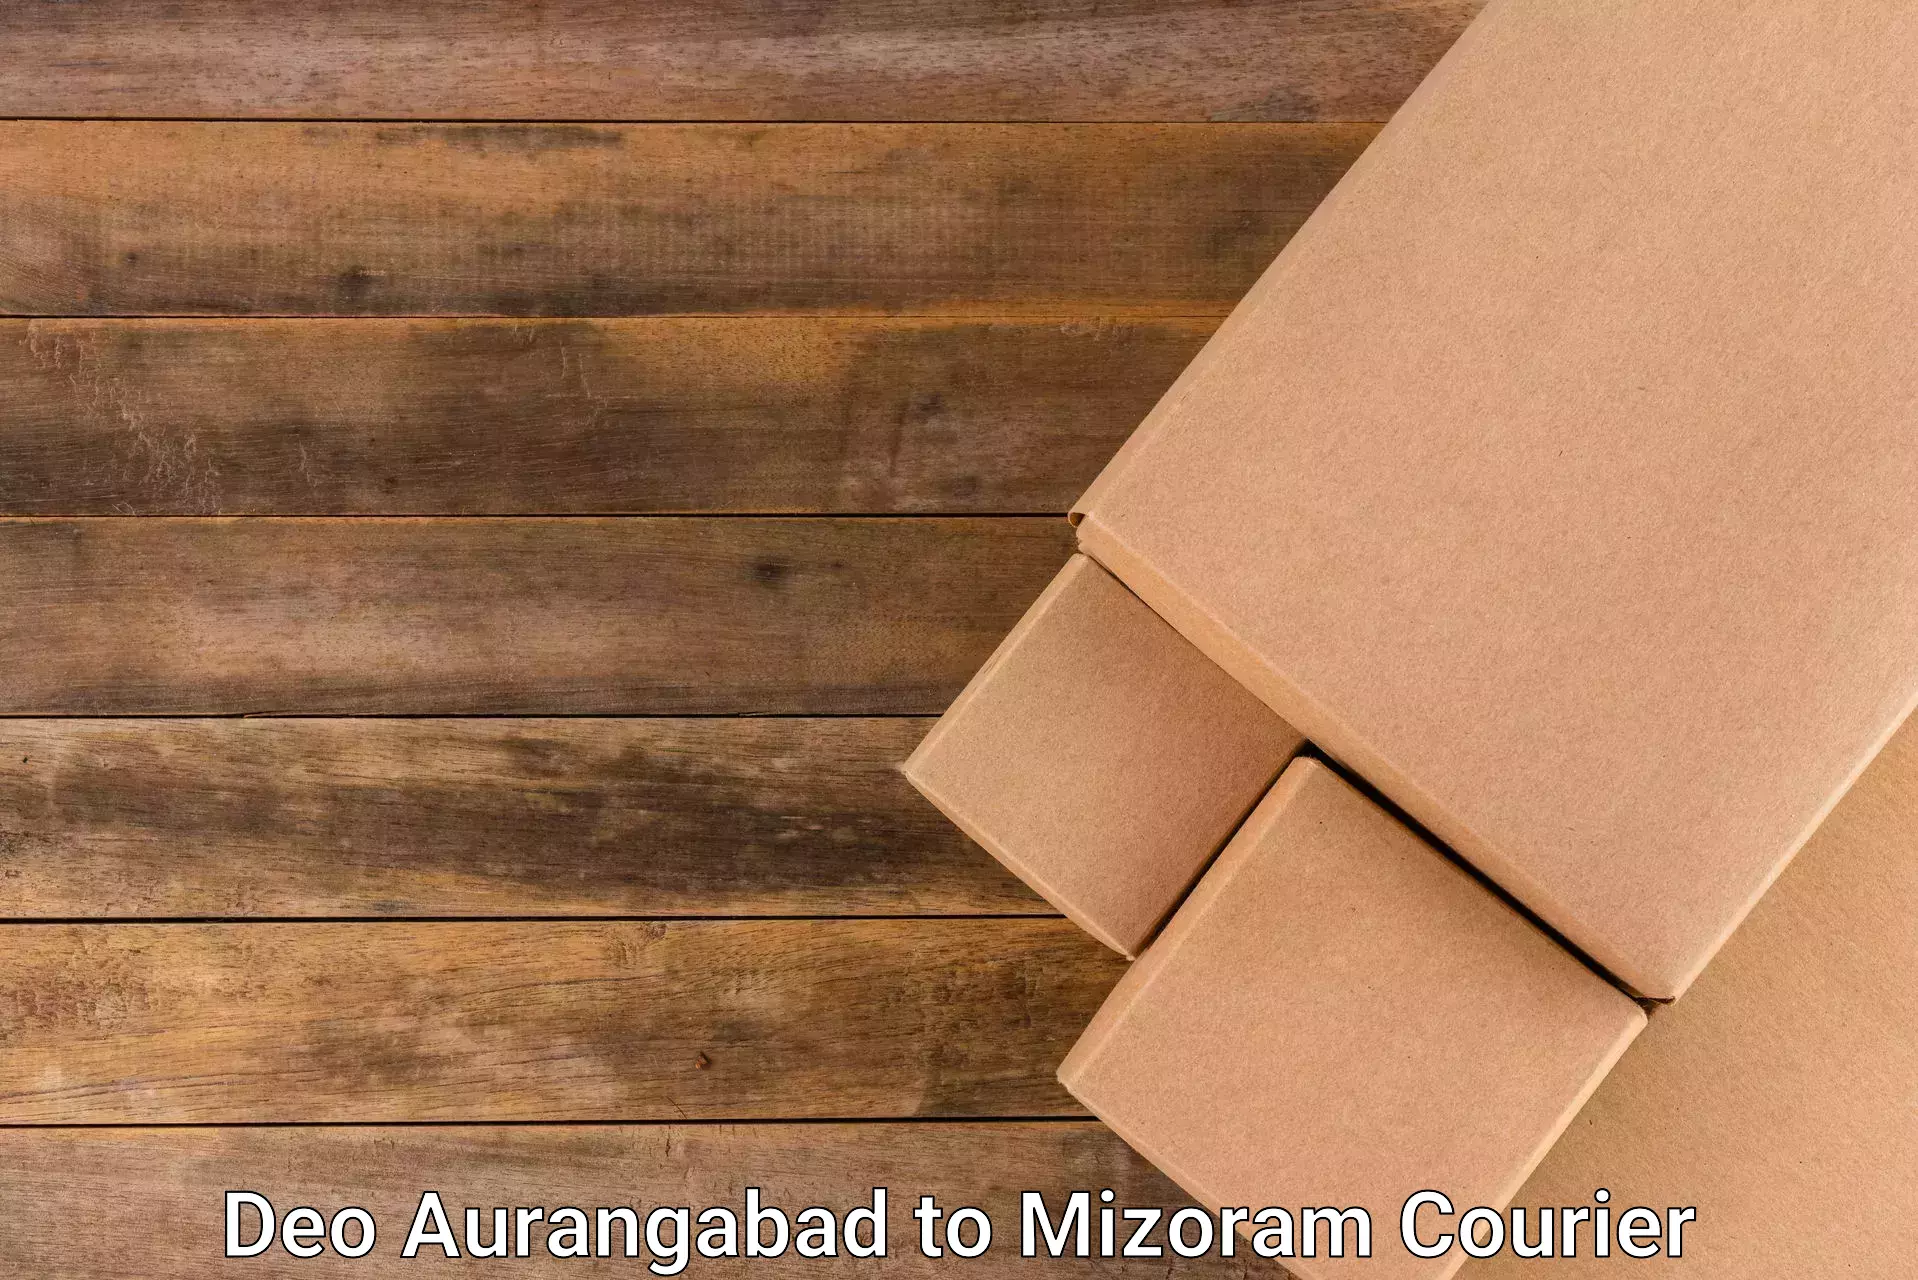 Multi-city courier Deo Aurangabad to Mizoram